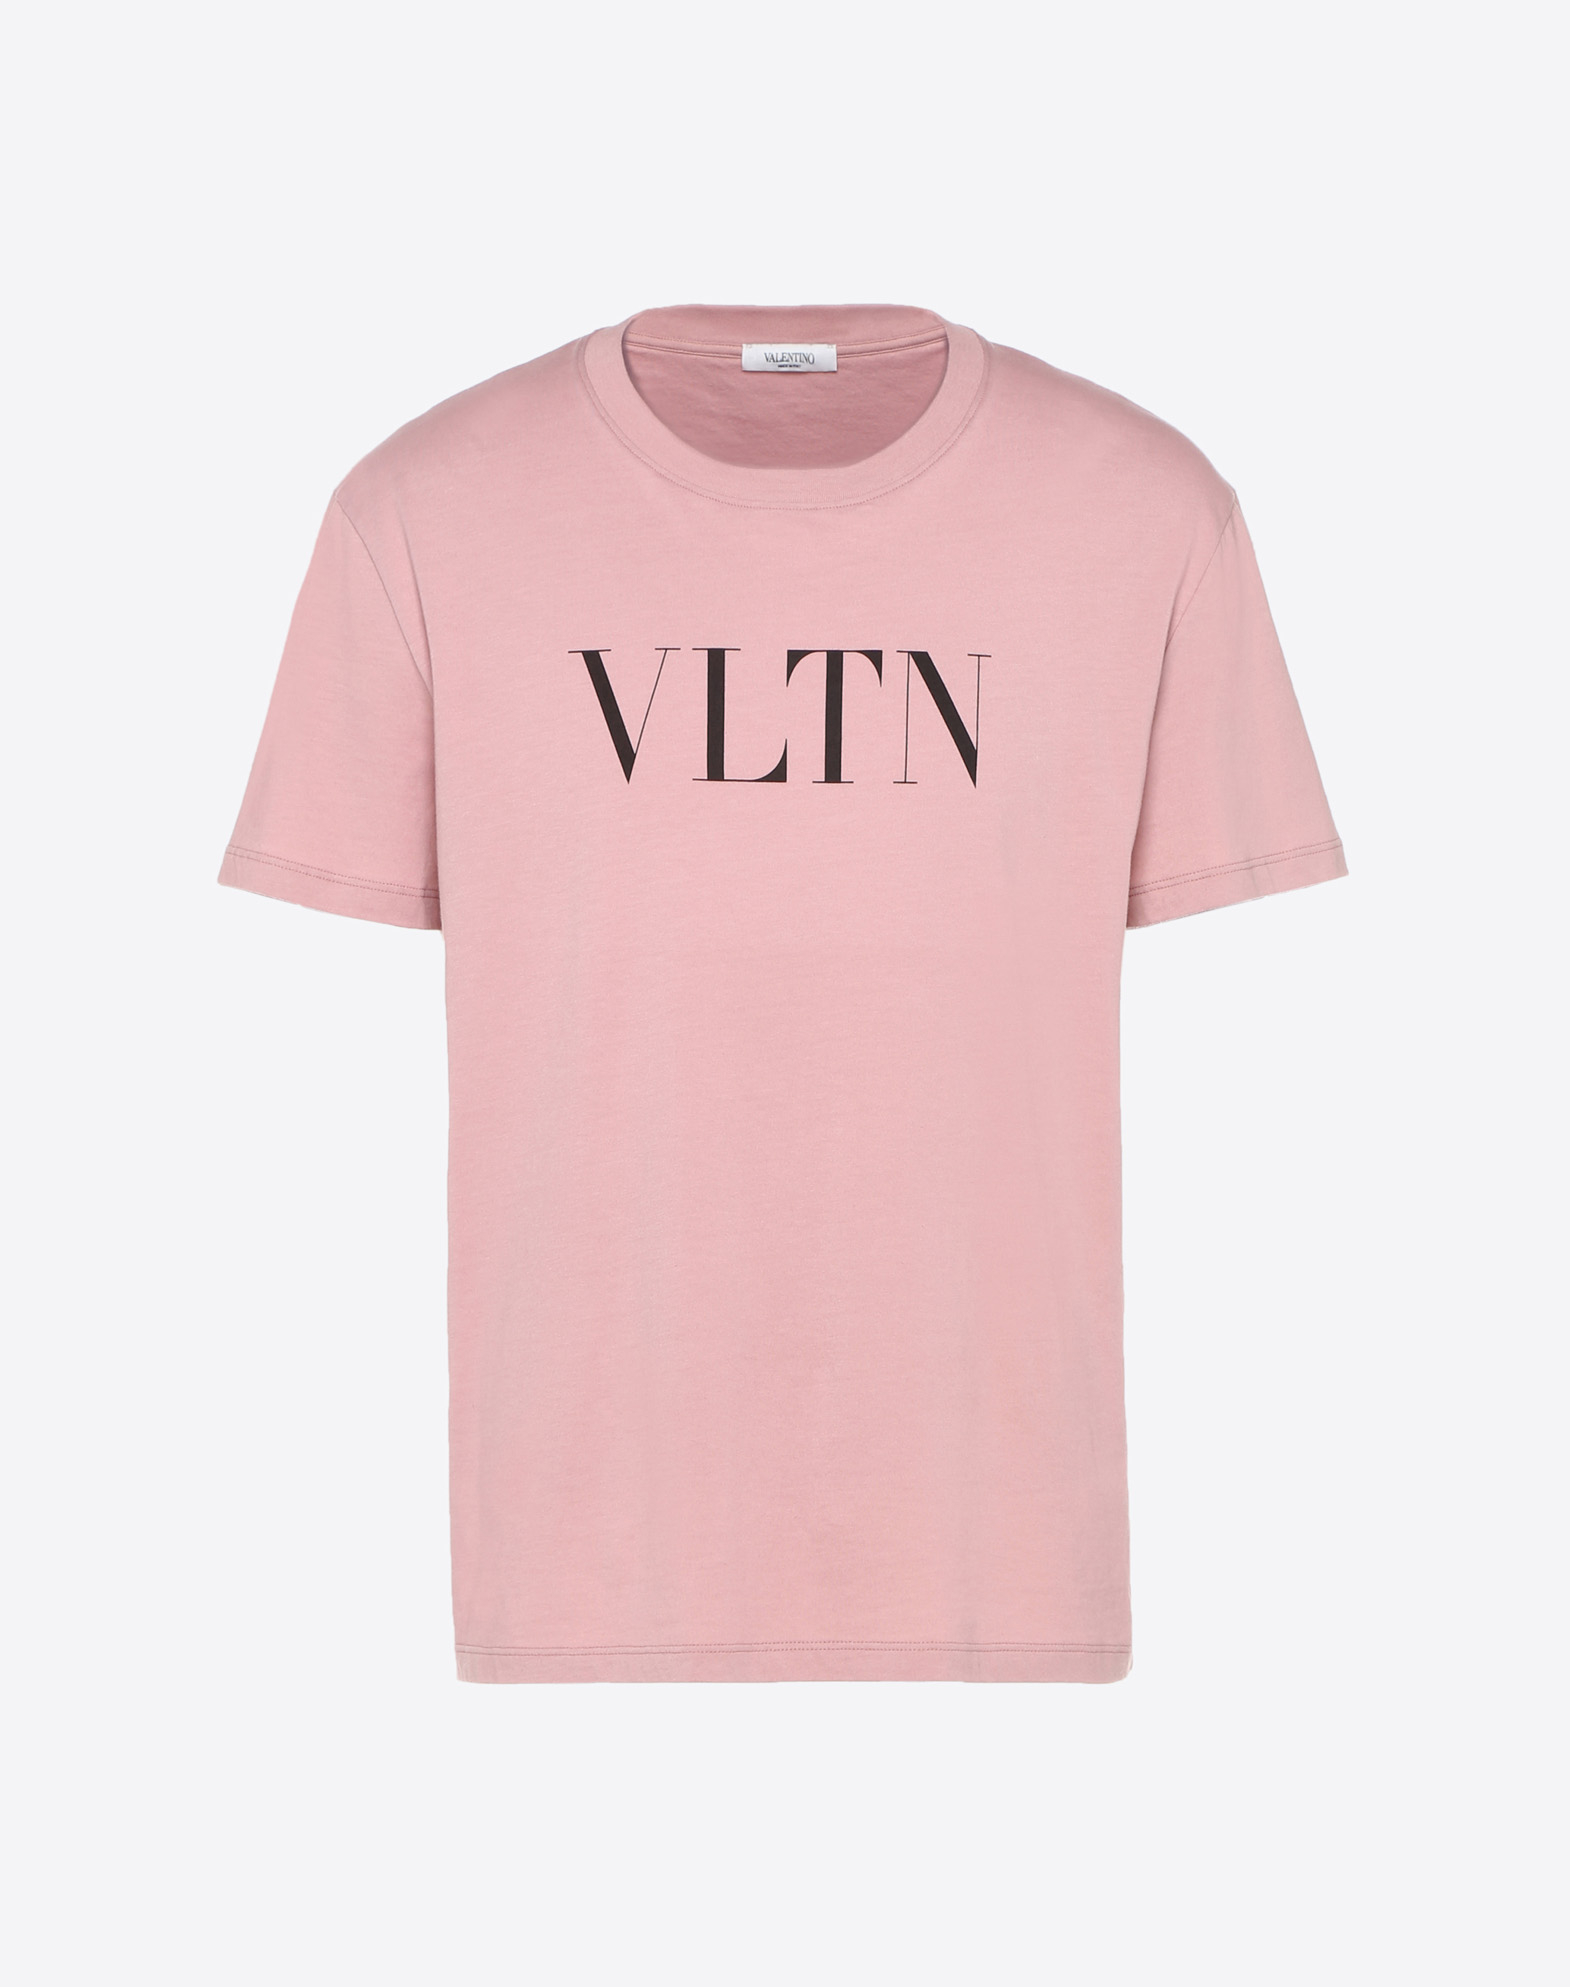 VLTN T-SHIRT for Man | Valentino Online Boutique